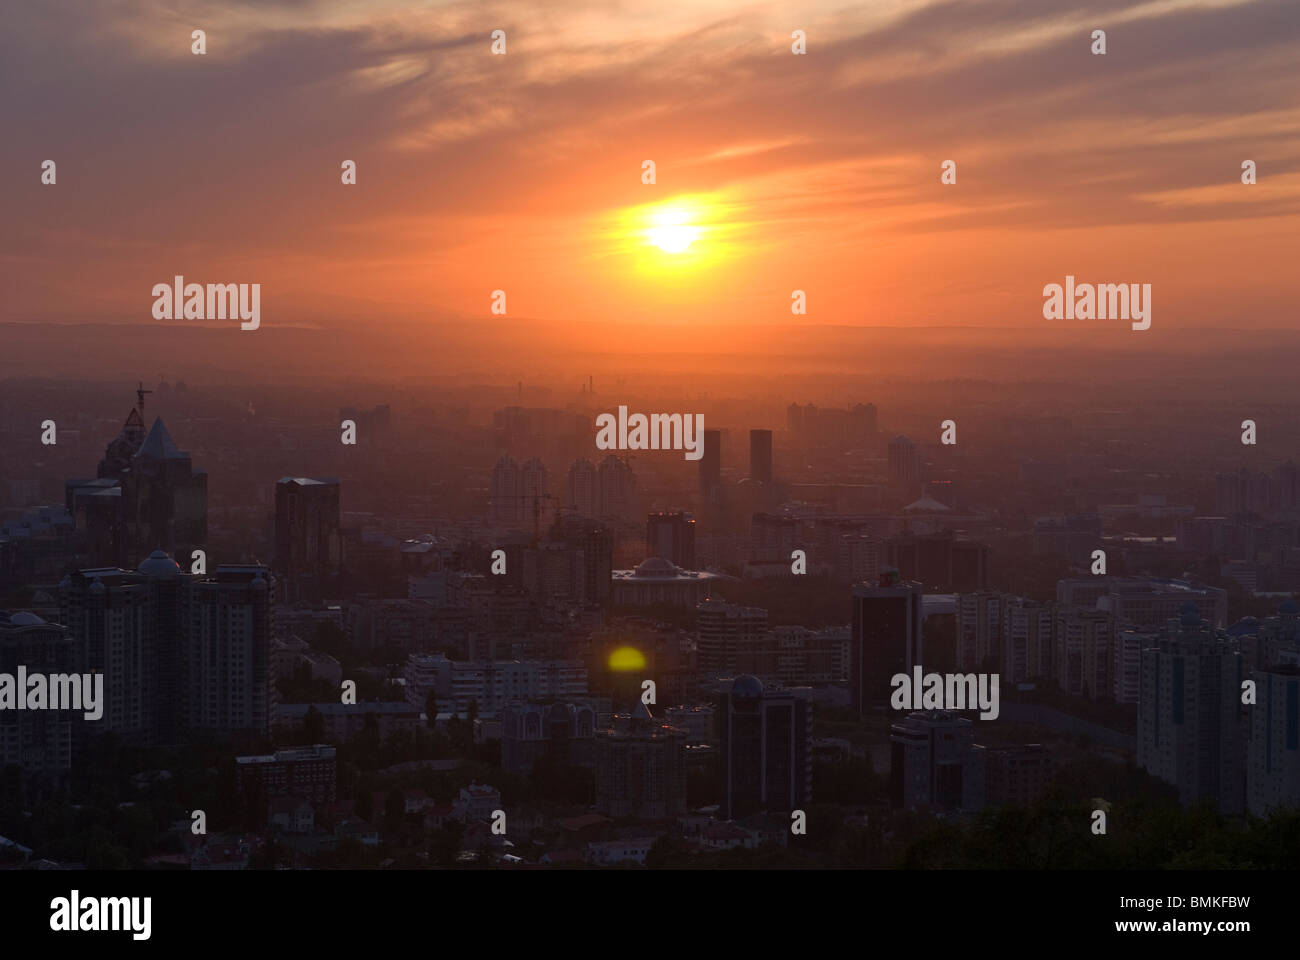 Skyline of Almaty at sunset, Kazakhstan Stock Photo